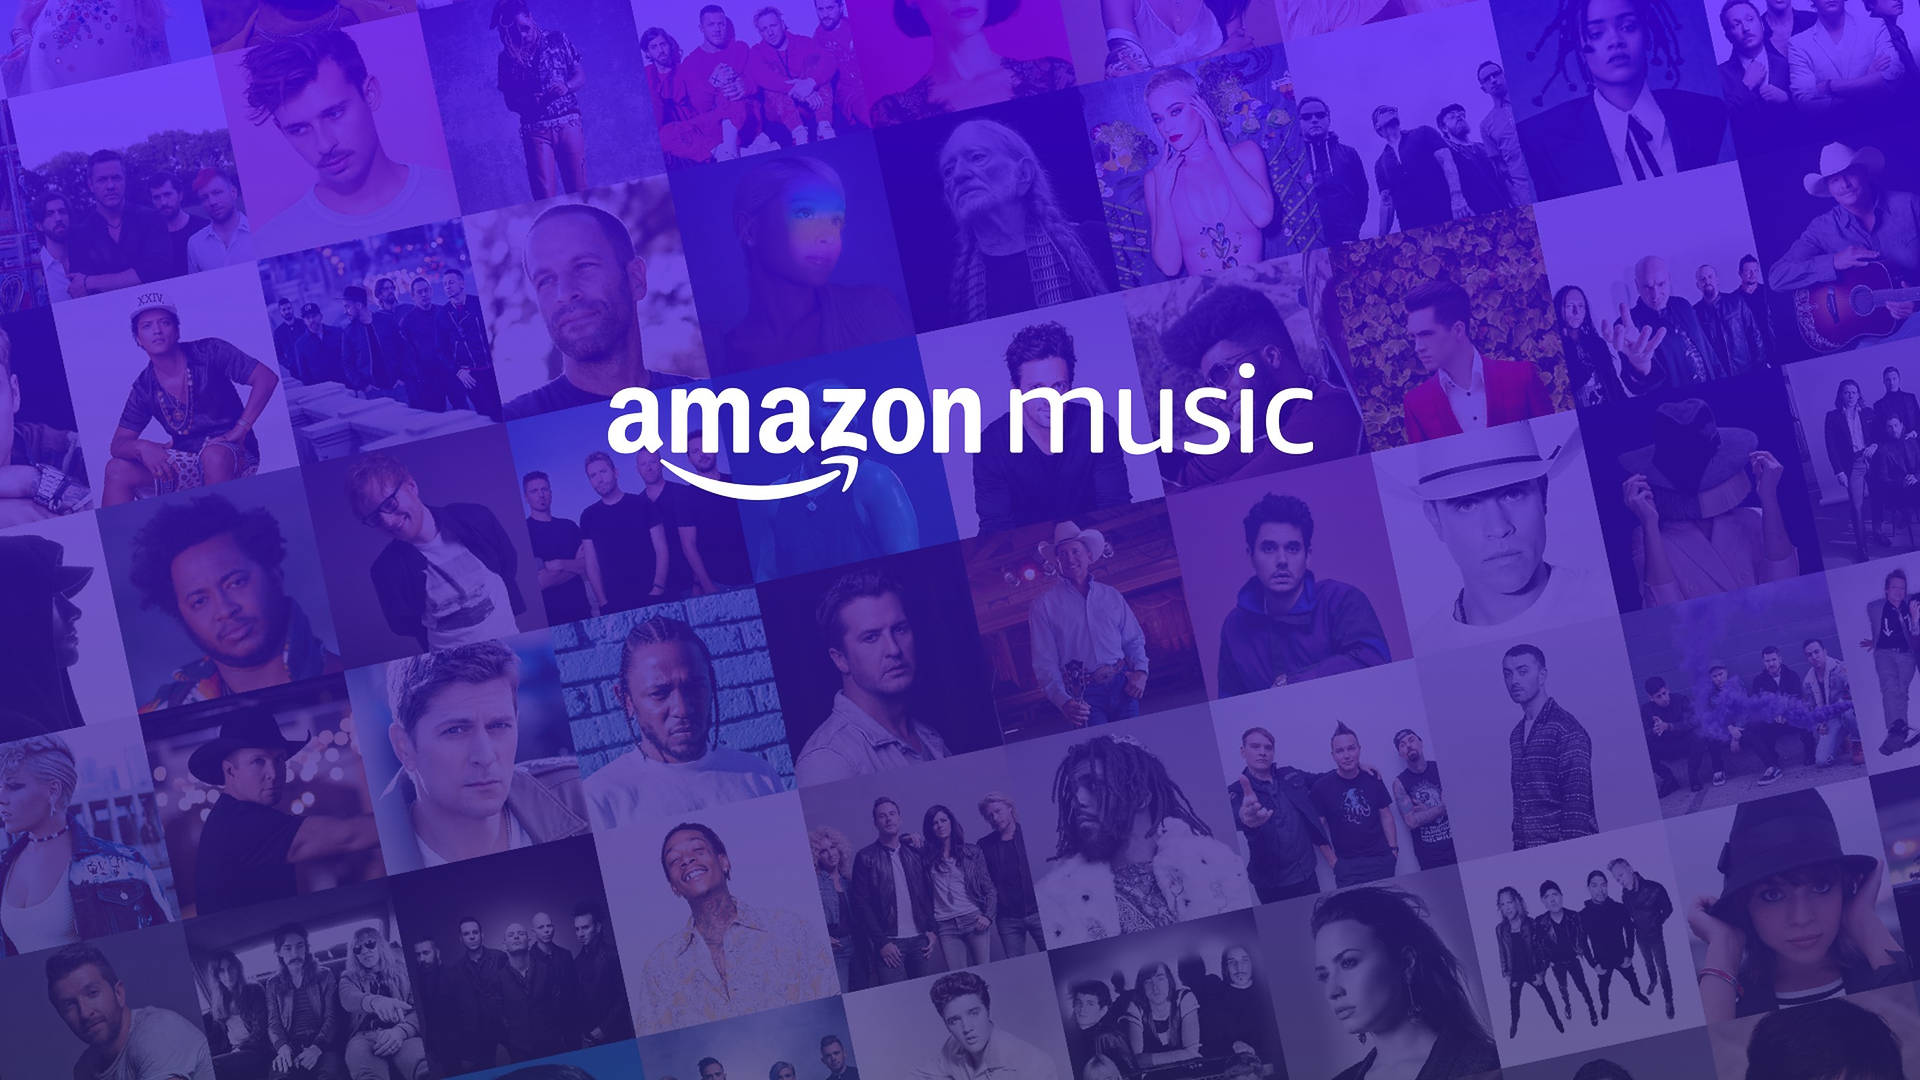 Amazon Music Streaming Platform Background